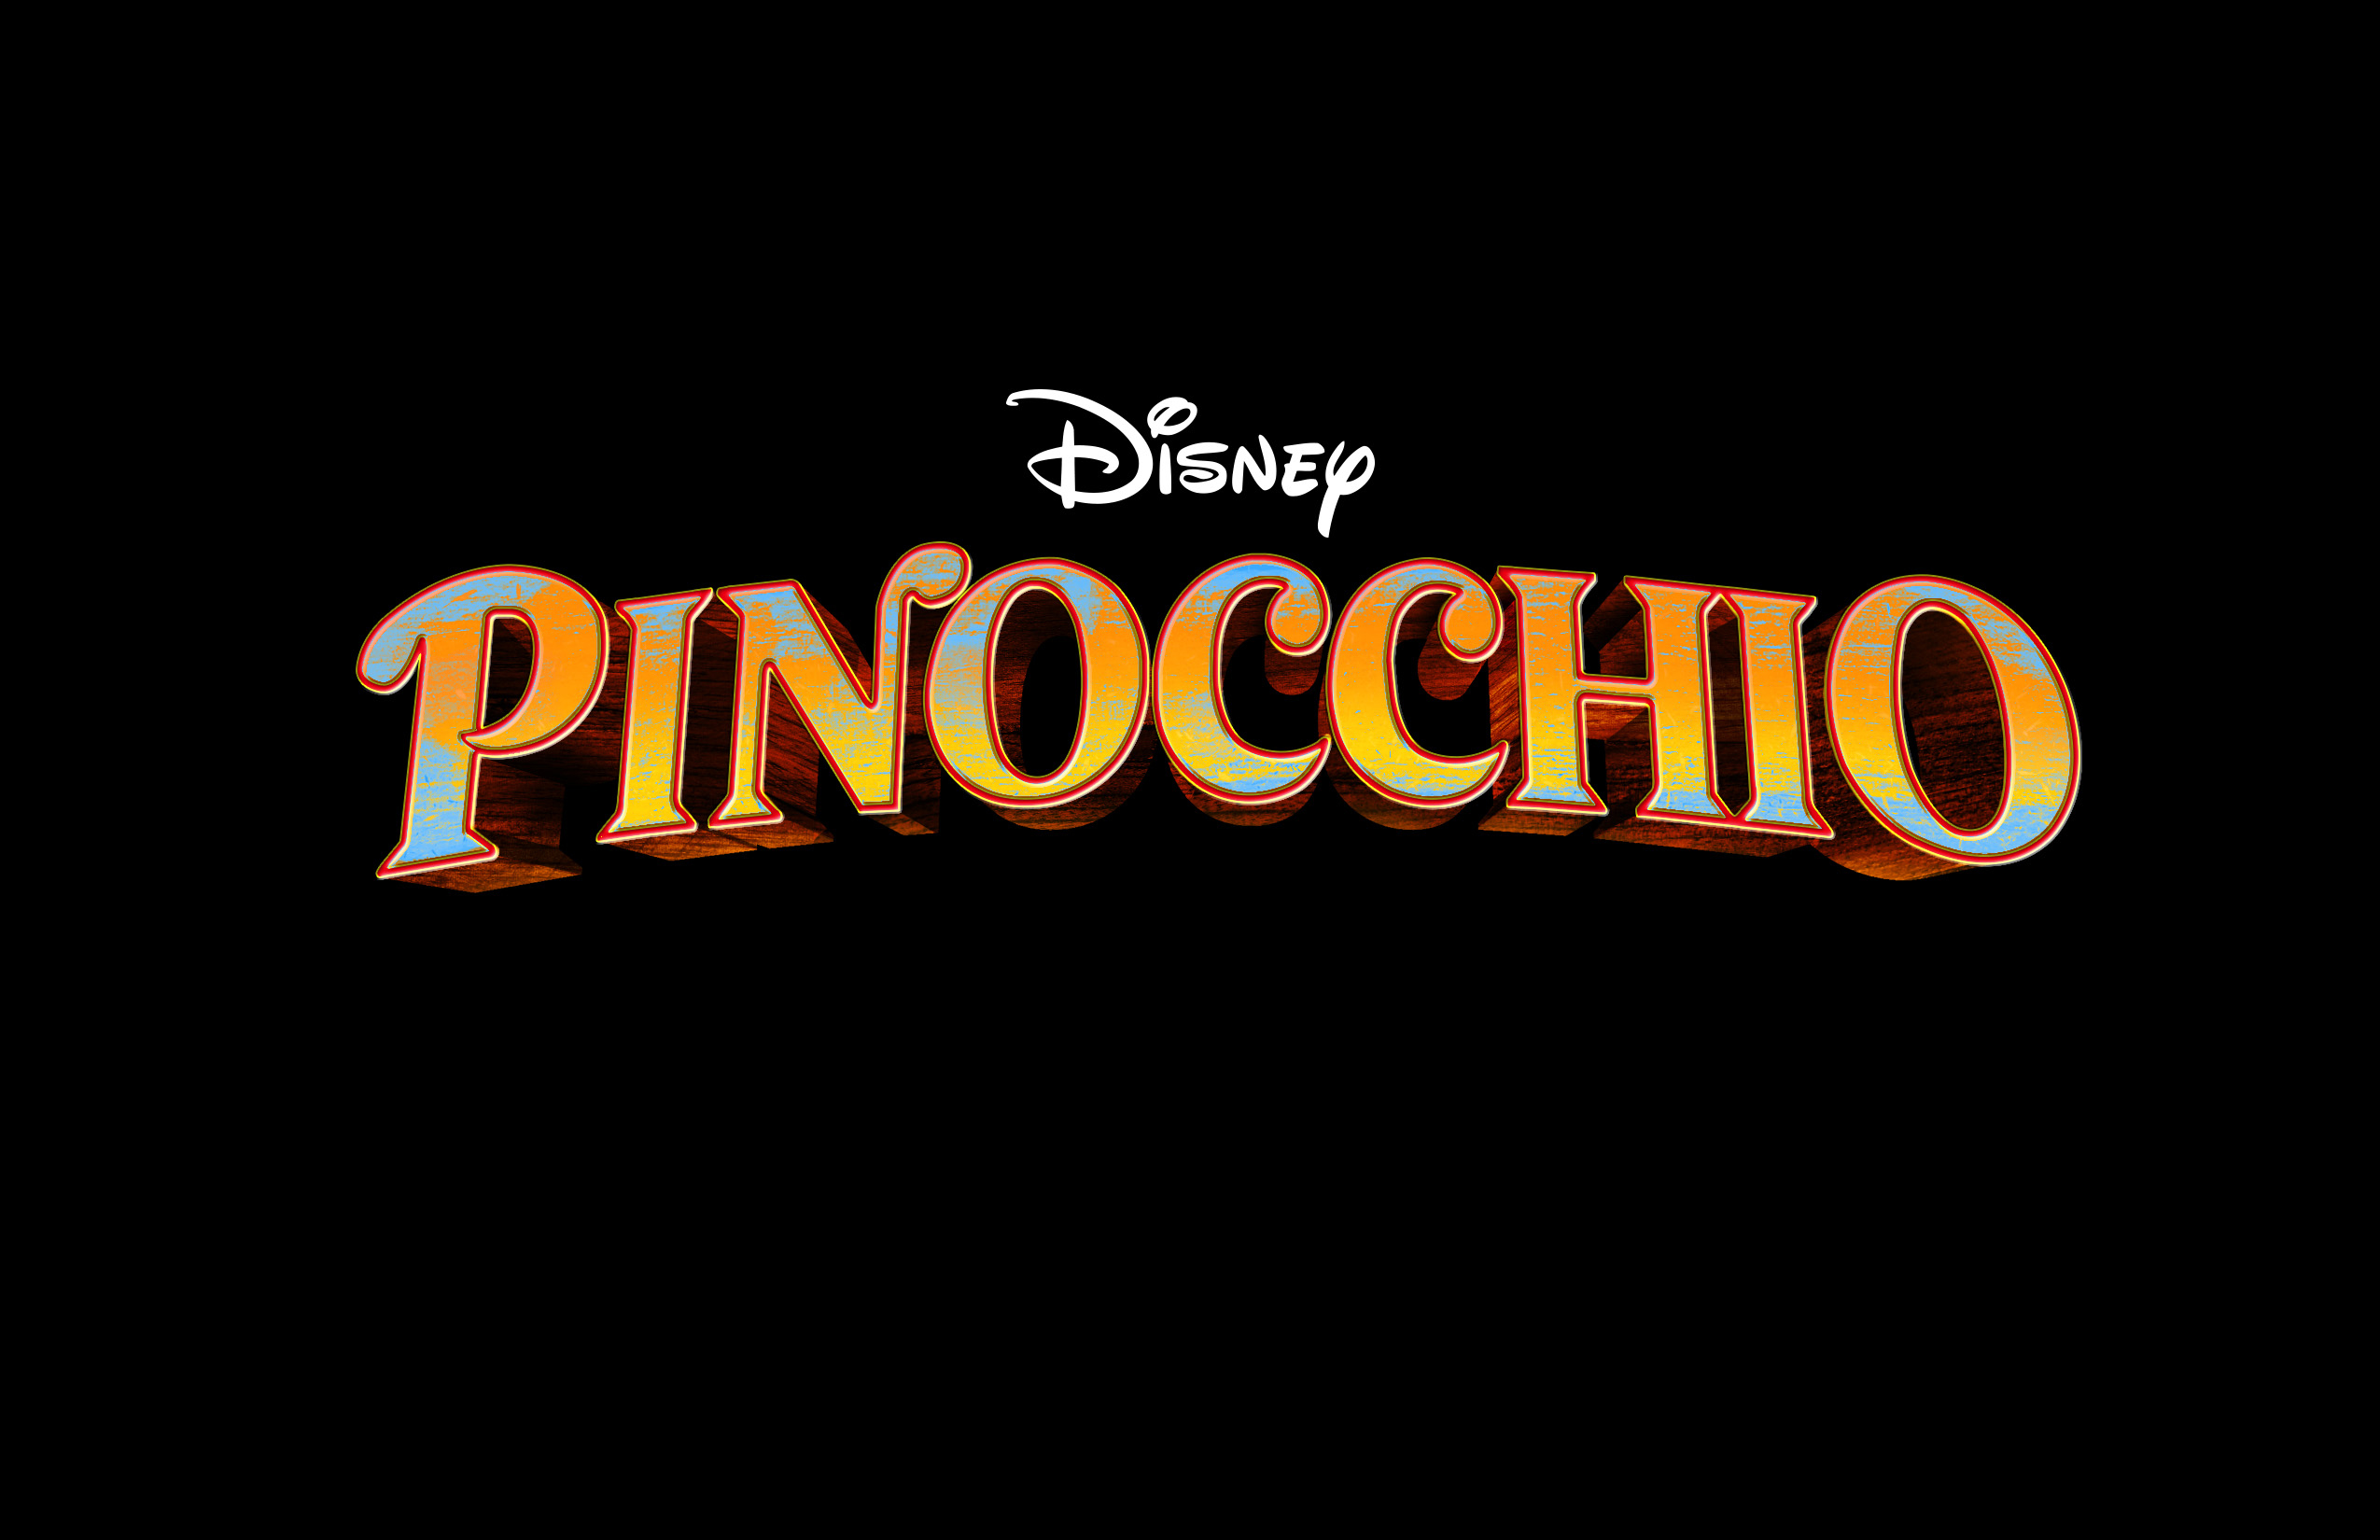 Luke Evans Discusses “The Coachman” From The Upcoming “Pinocchio” Disney+ Original Film | What's On Disney Plus